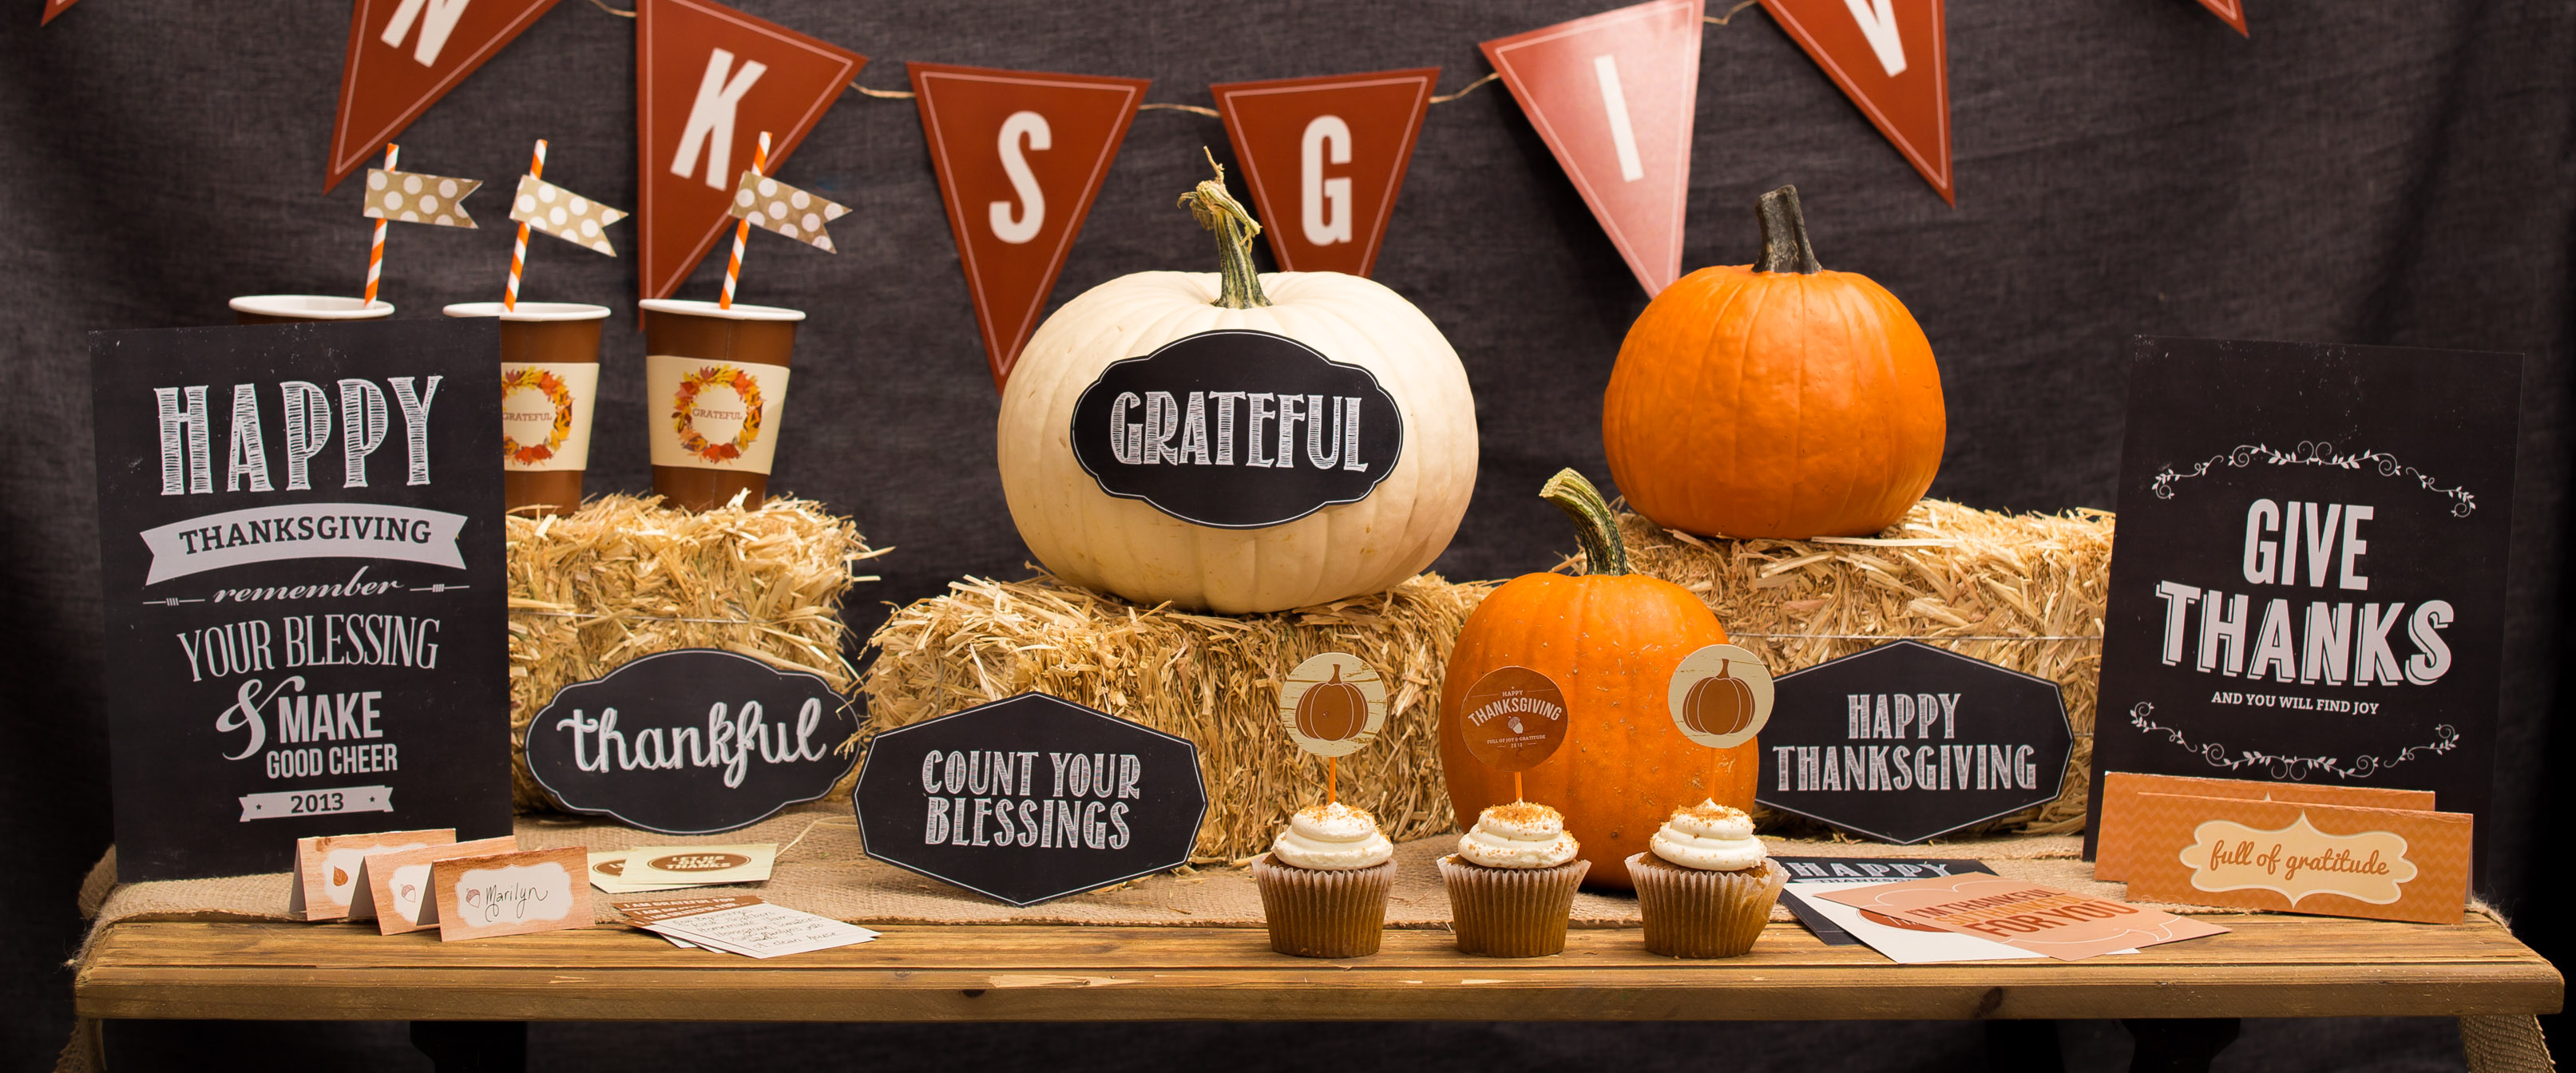 thanksgiving, holiday, message, pumpkin